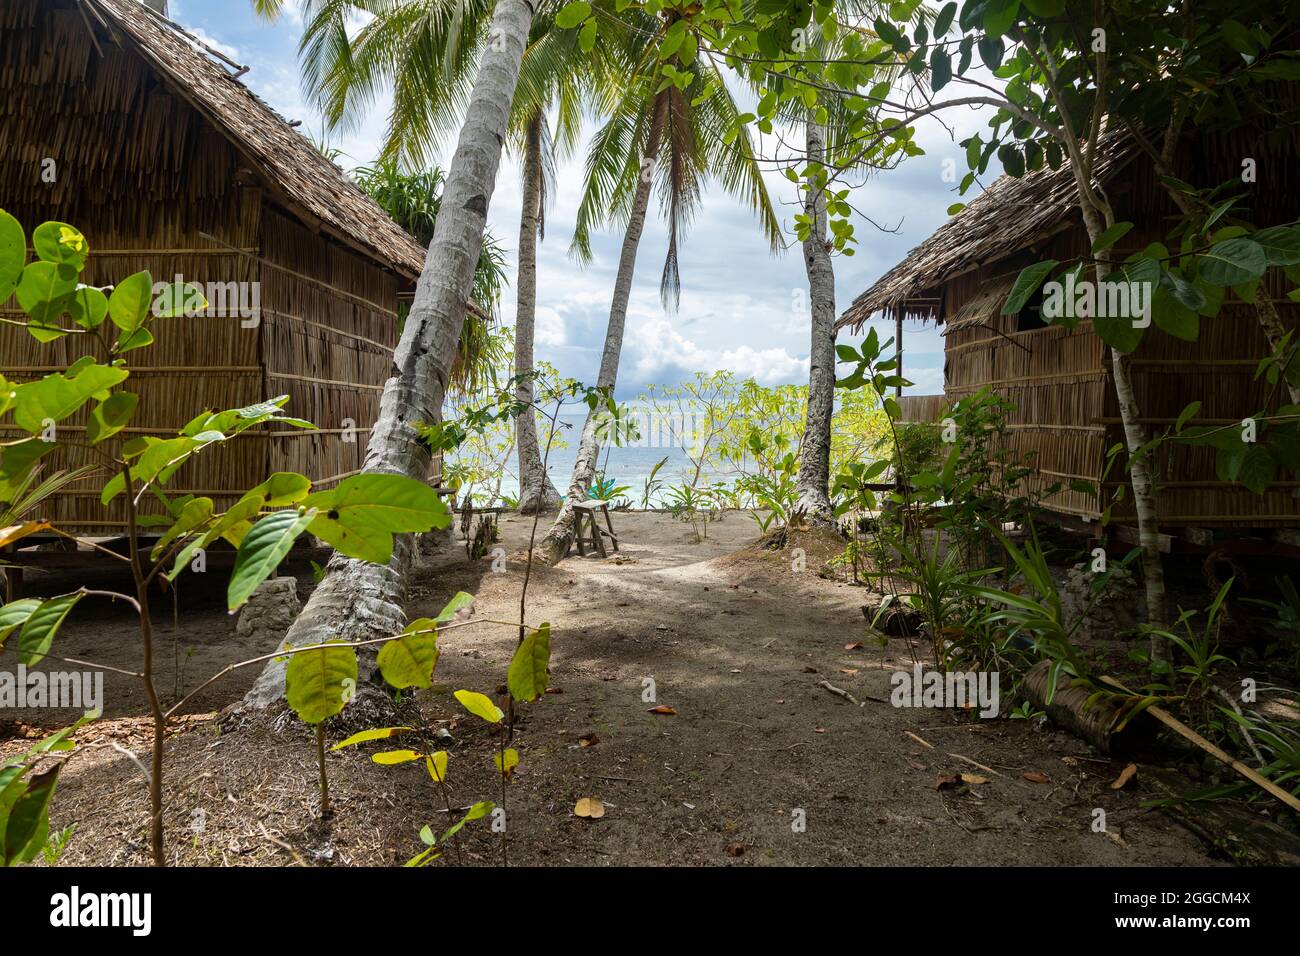 Small traditionally built huts among palm trees near a tropical beach on Gam Island, Raja Ampat, Indonesia Stock Photo